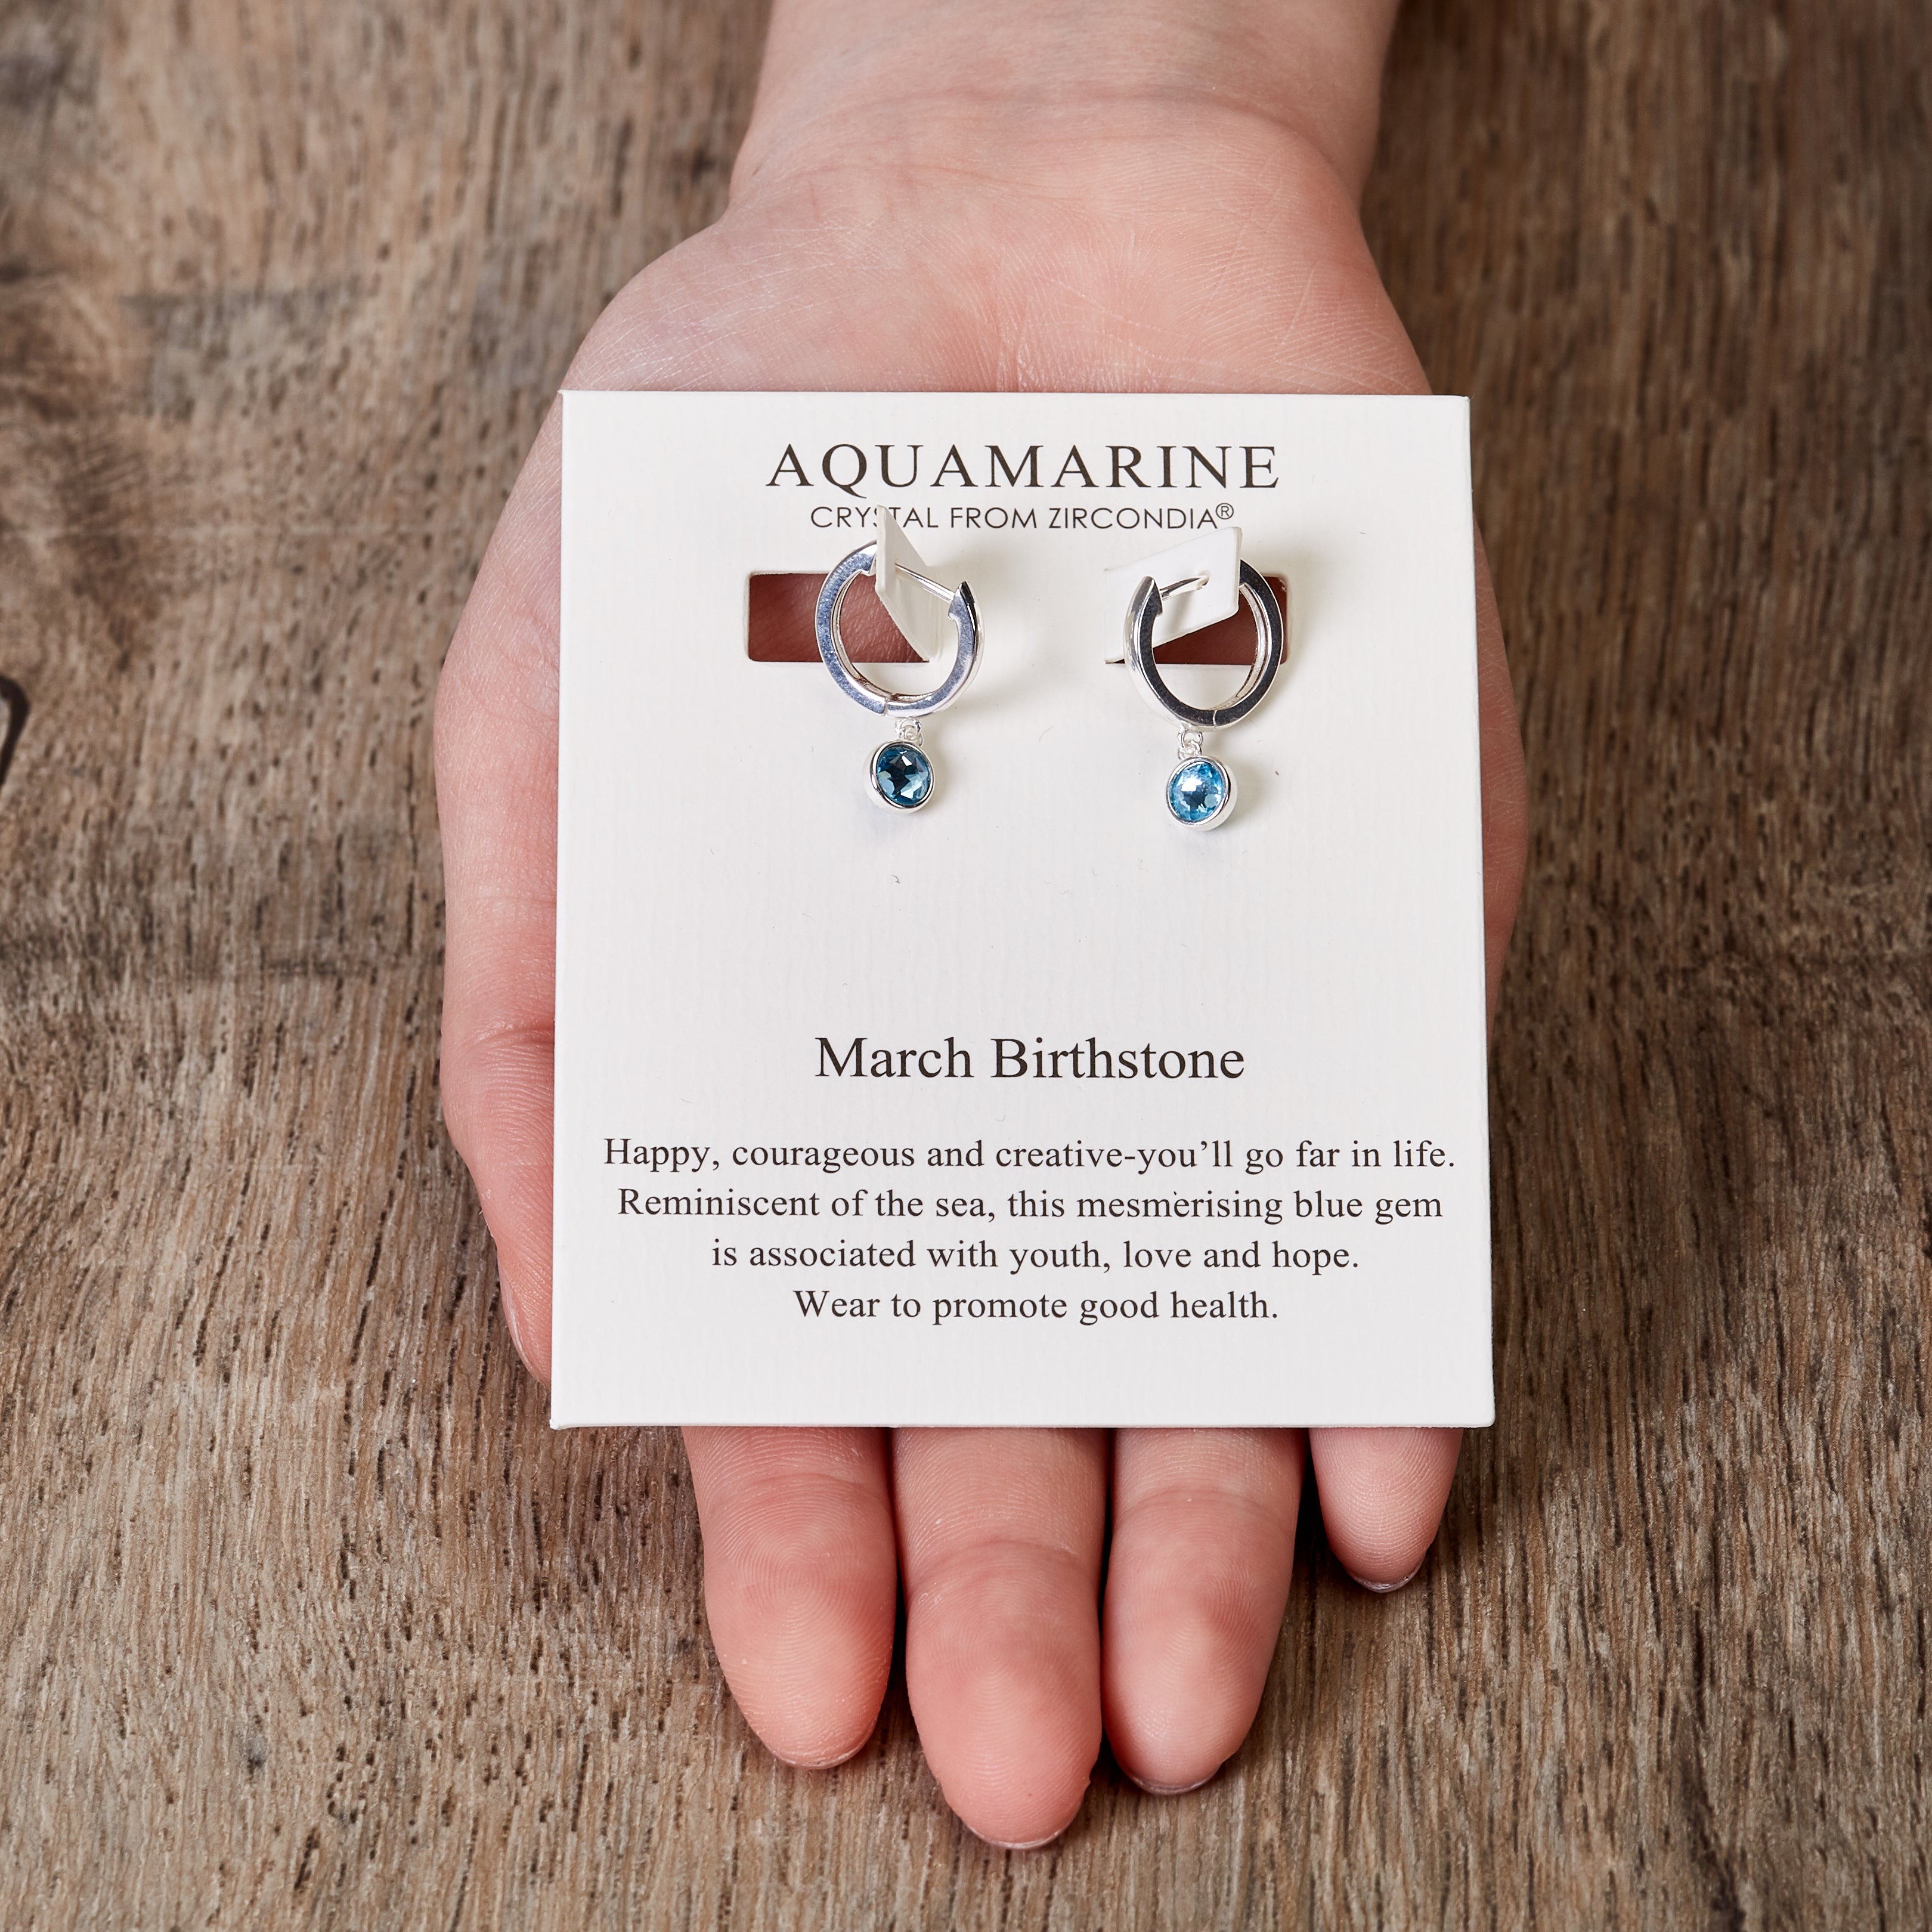 March Birthstone Hoop Earrings Created with Aquamarine Zircondia® Crystals